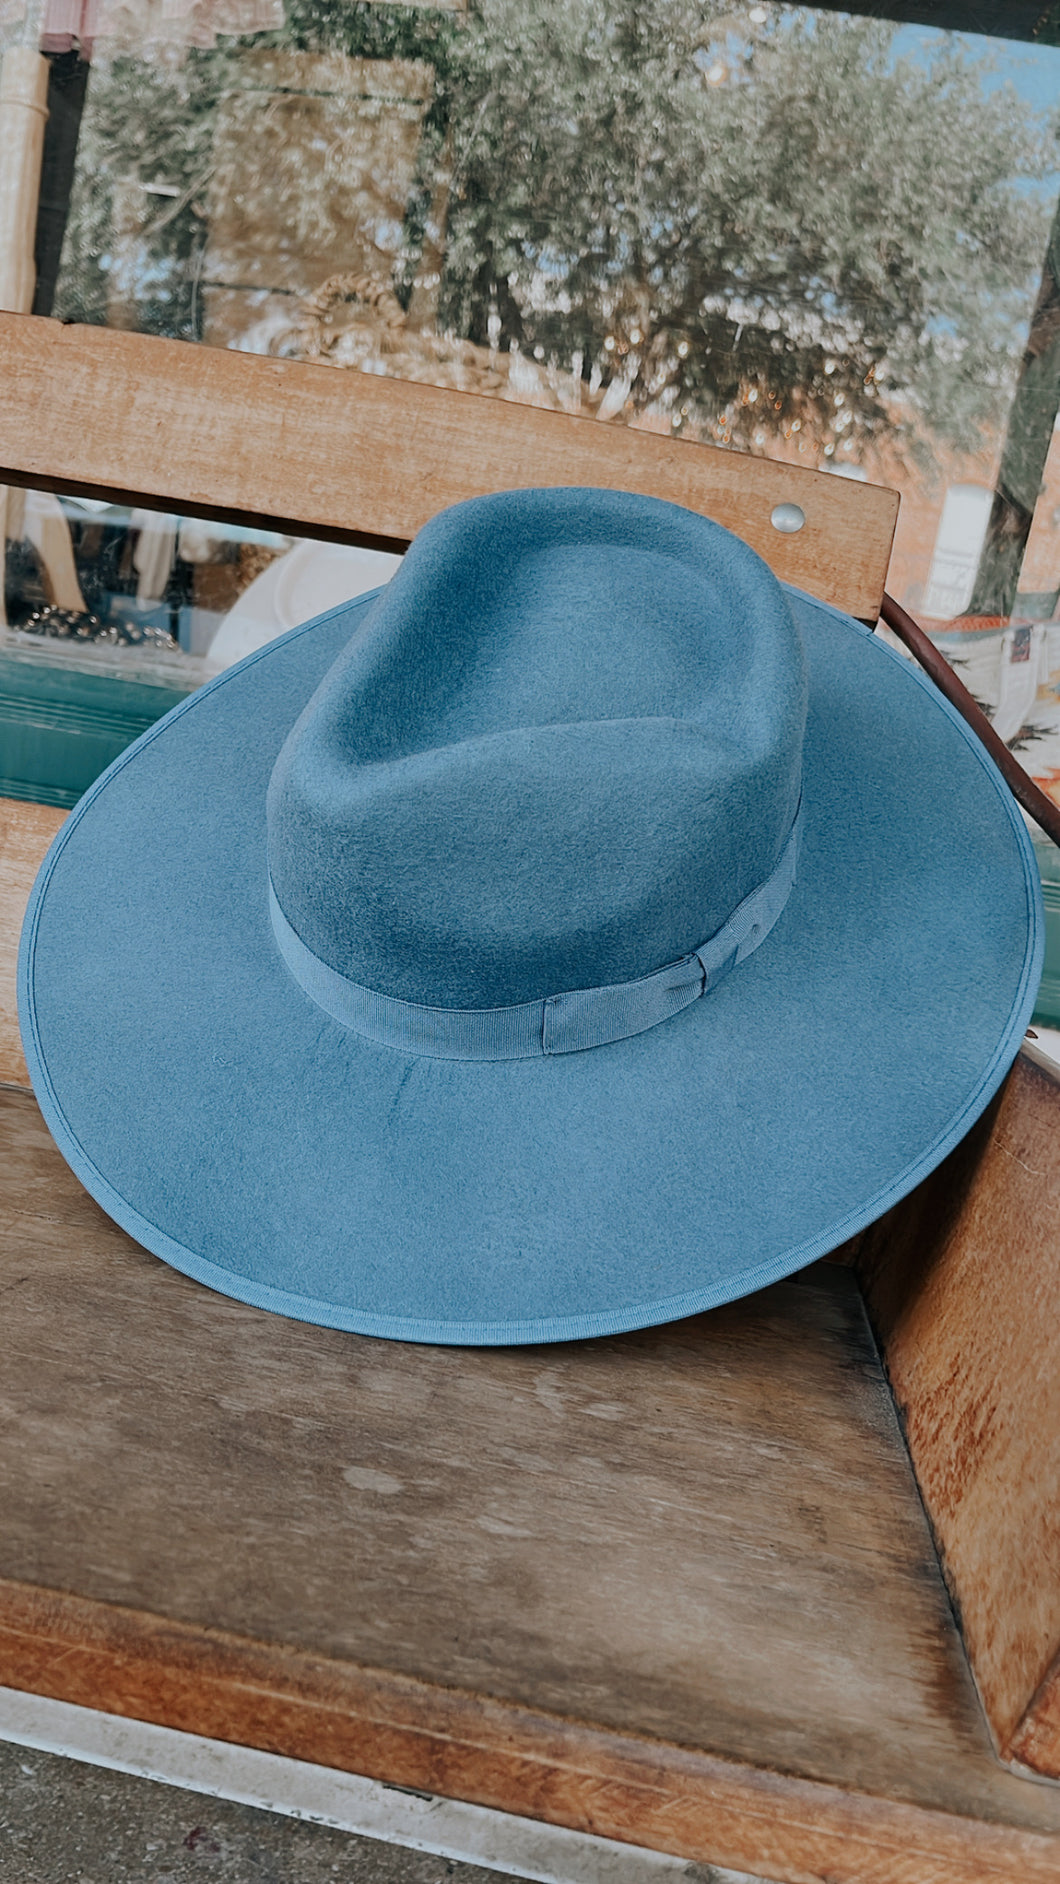 The Powder Blue Hat